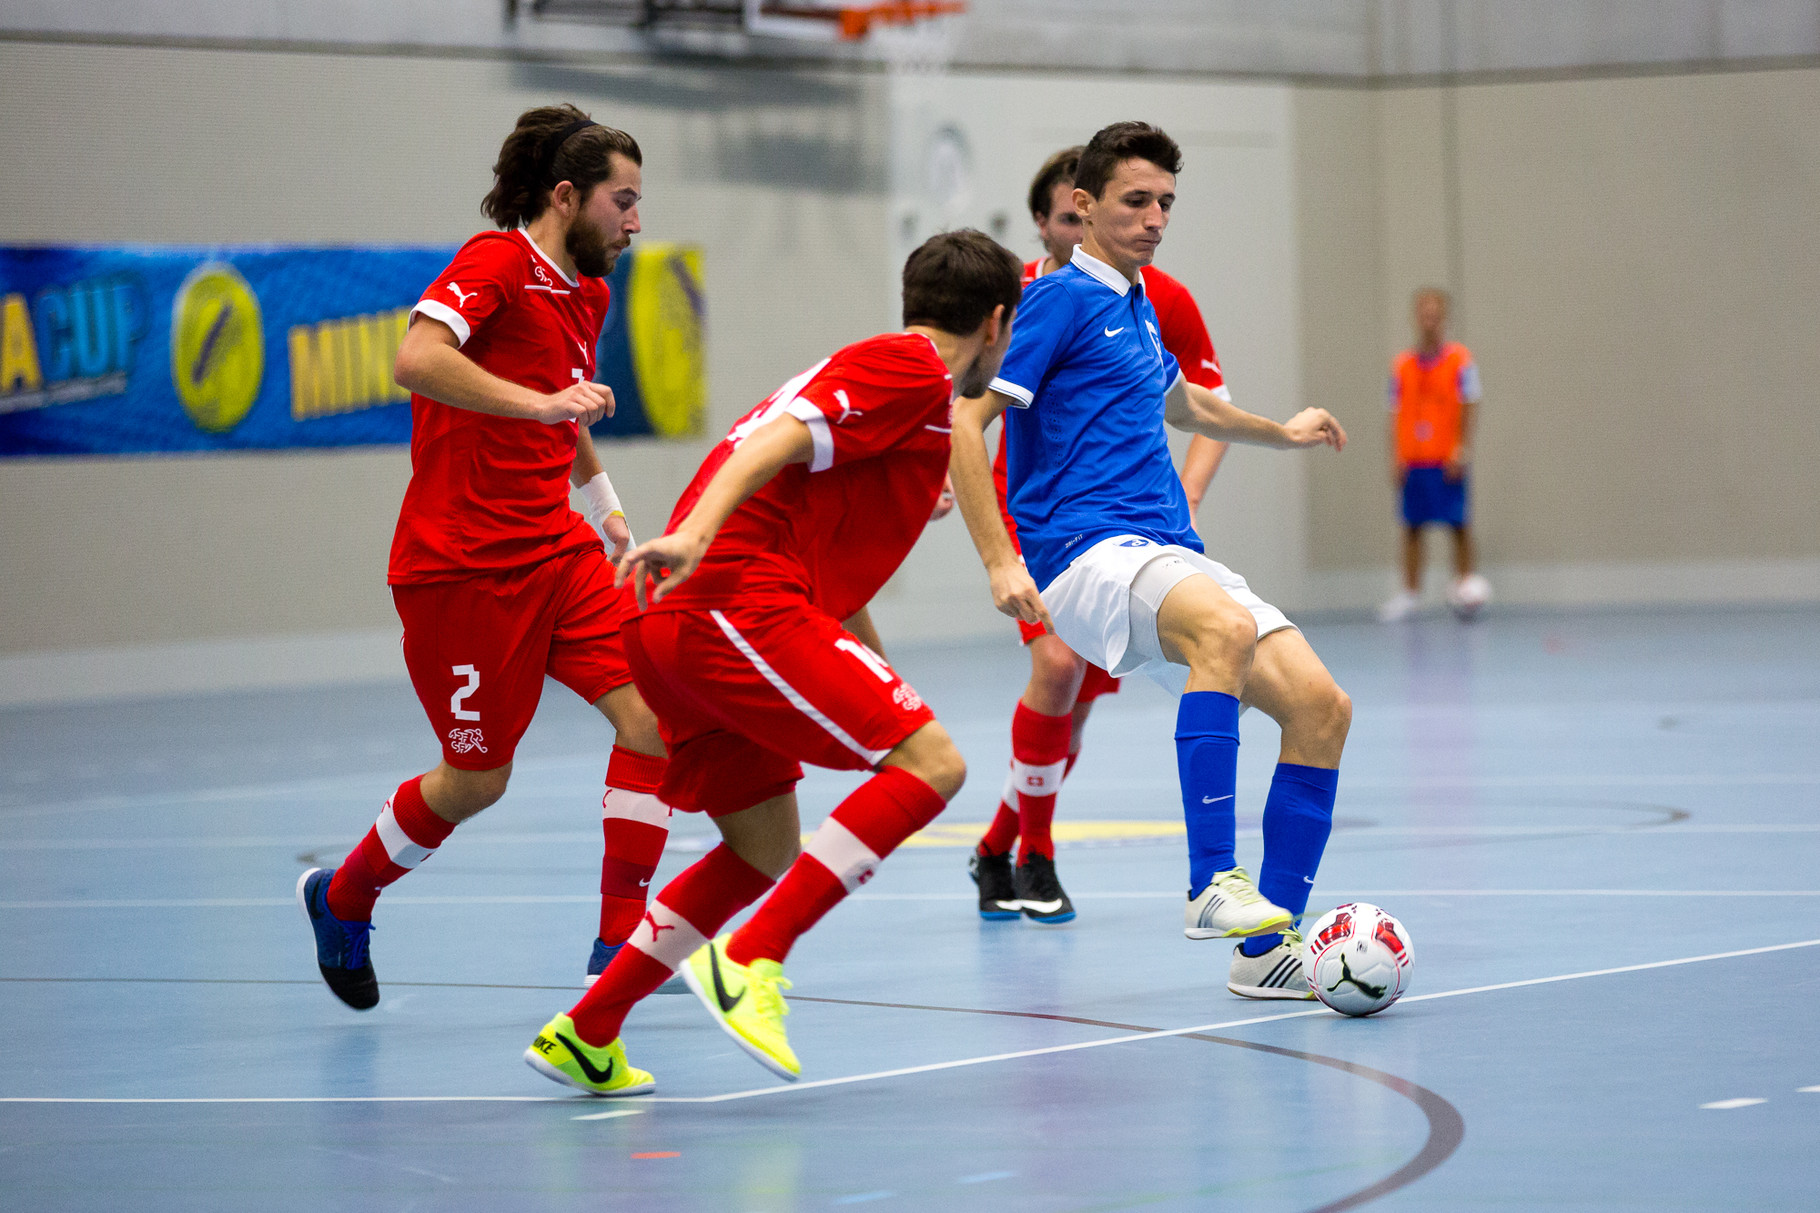 MinervaCup 2015 - Swiss Futsal Nationalteam VS. Futsal Dinamo